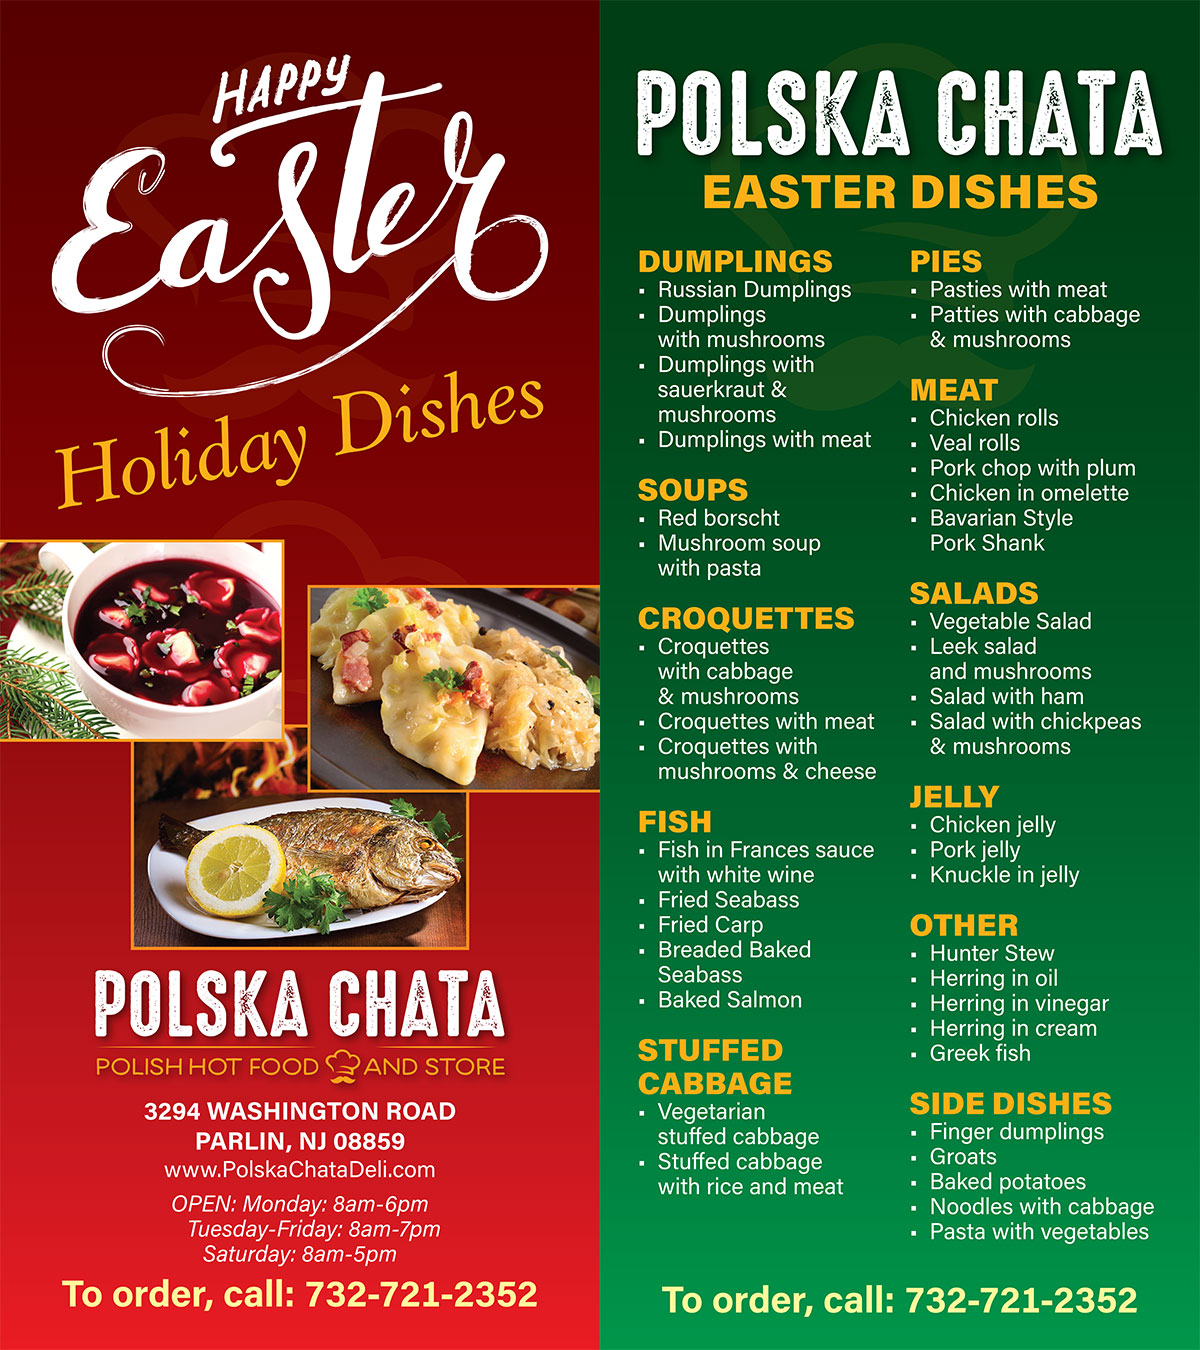 Polish Easter Dishes In Nj From Polska Chata Stany Zjednoczone Dziennik Polonijny Usa Polish Daily News Dziennik Polonijny Usa Polish Daily News